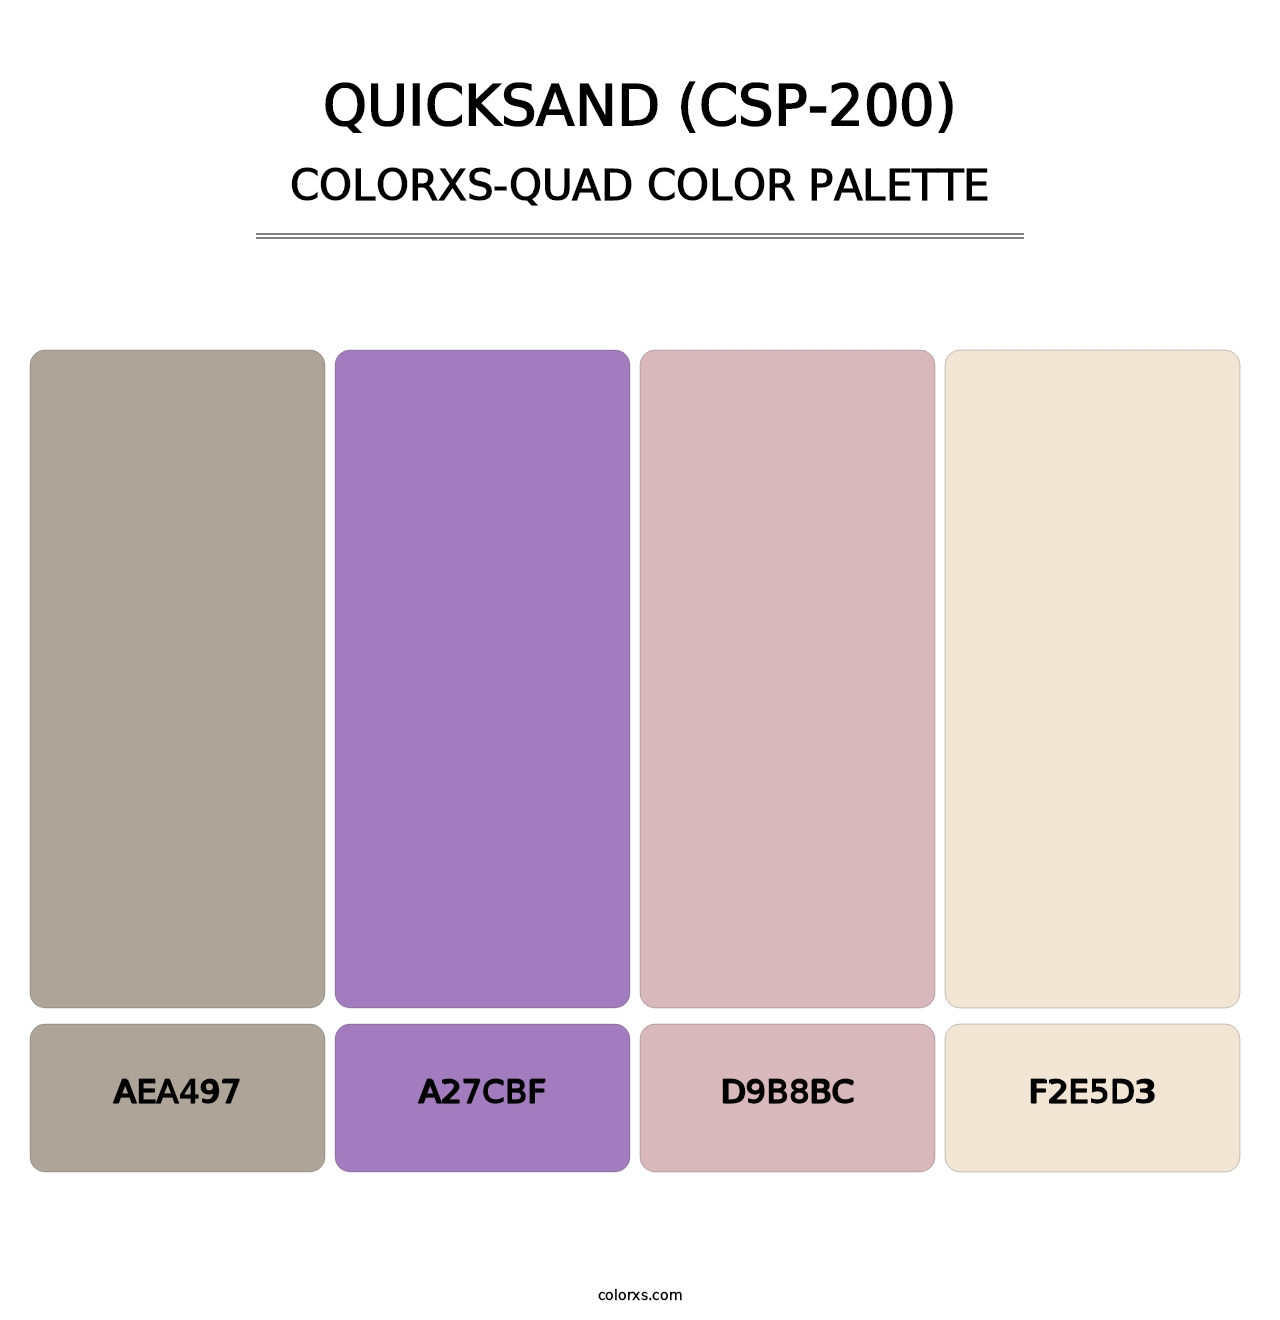 Quicksand (CSP-200) - Colorxs Quad Palette